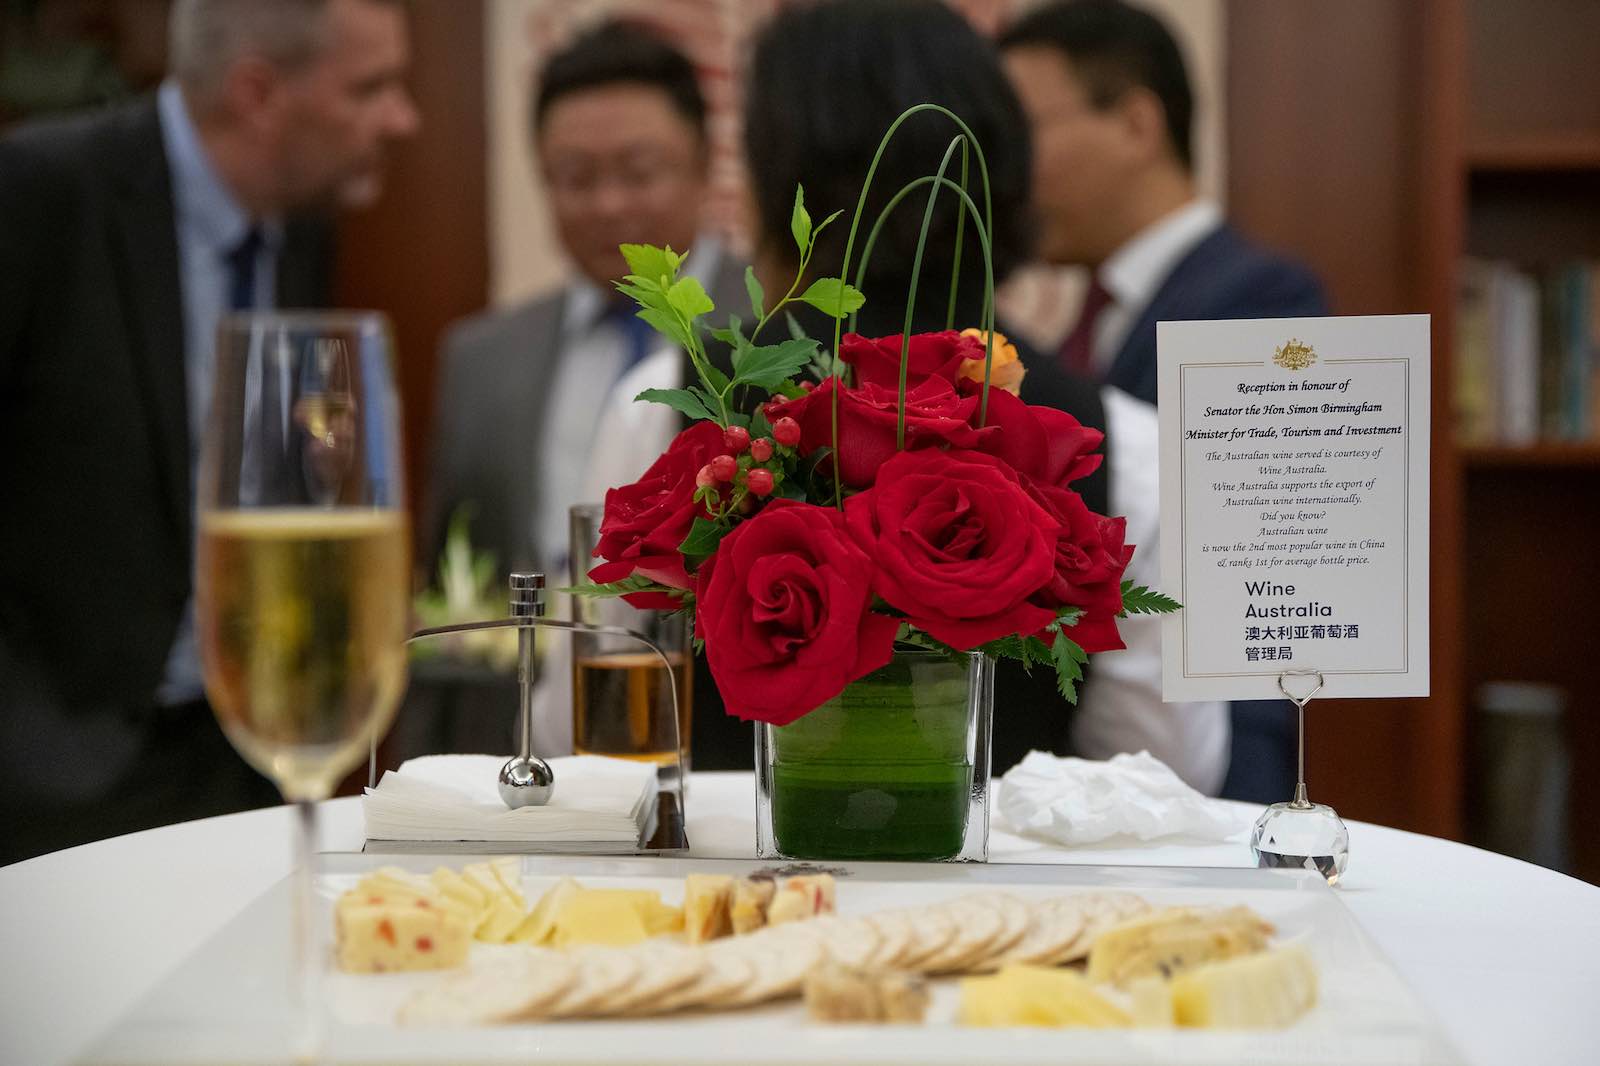 Reception celebrating Australia-China ties at the Australian Ambassador’s residence, Beijing, 1 August 2019 (DFAT/Flickr)